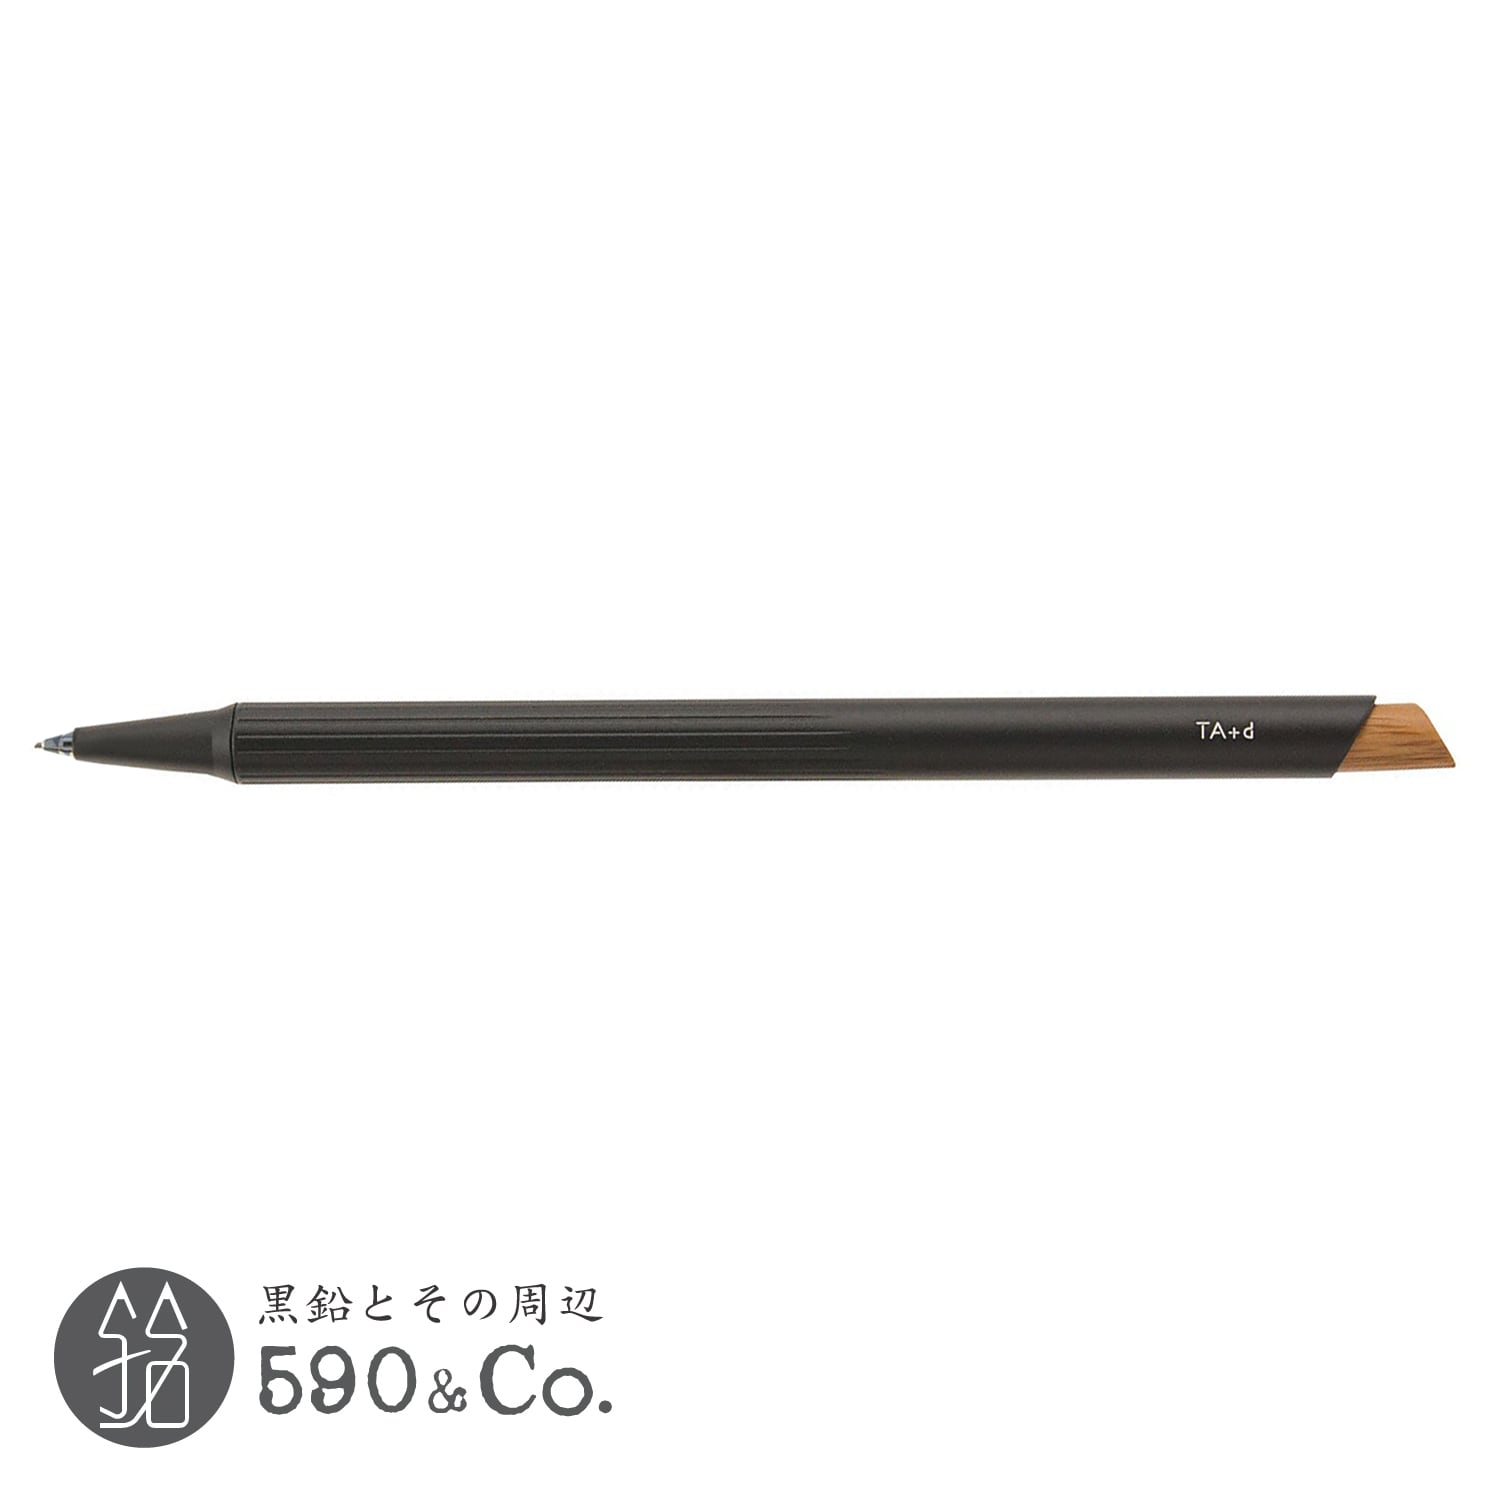 TreAsia Design/TA+d】FIBER Bamboo Mechanical Pencil (ブラック) 590Co.